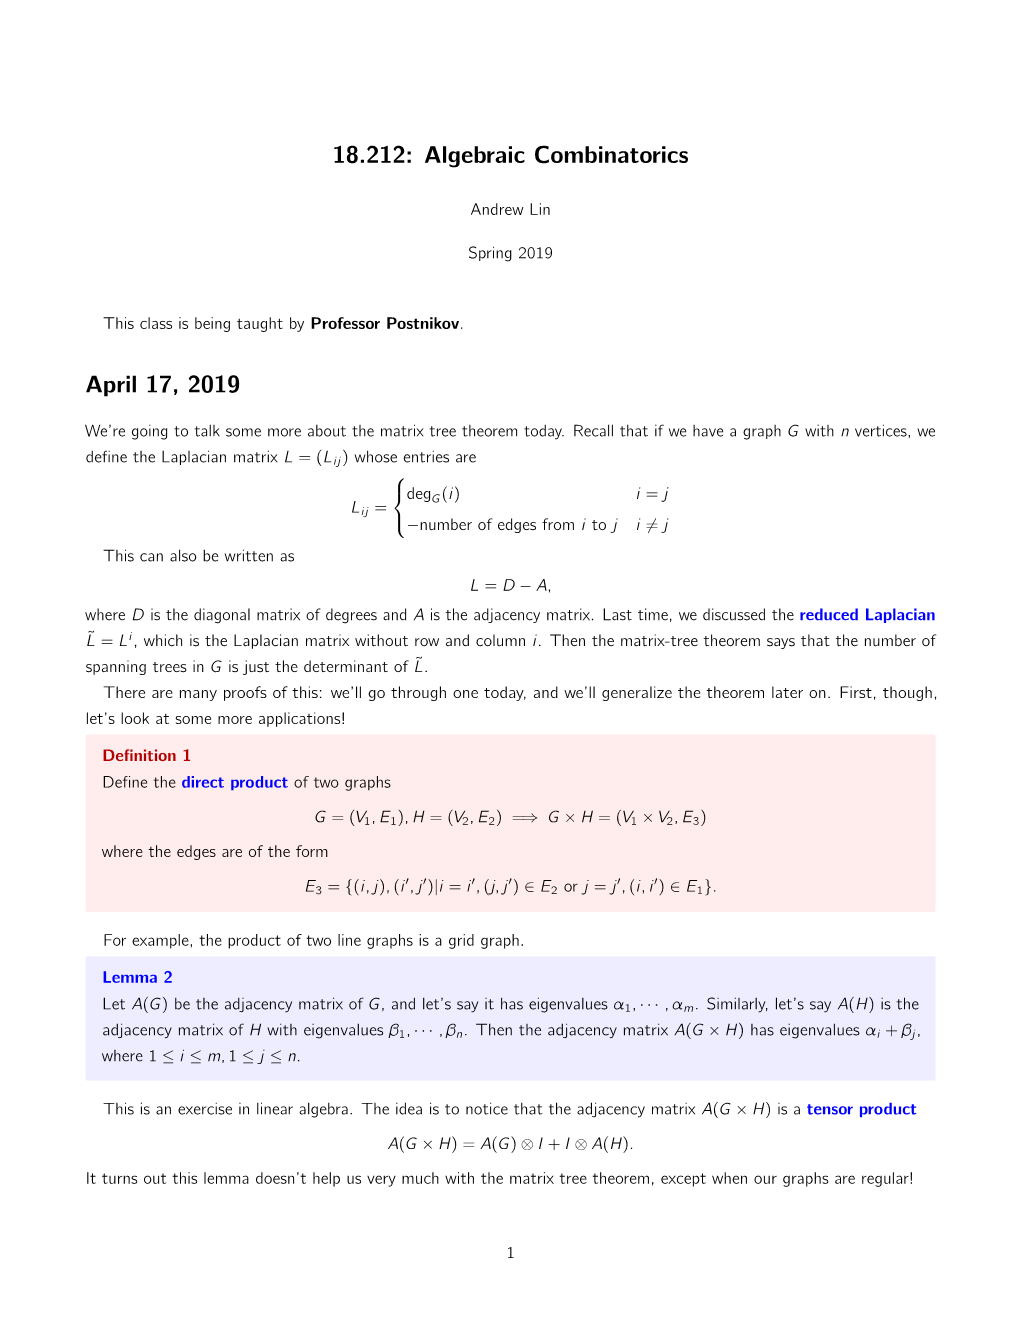 18.212 S19 Algebraic Combinatorics, Lecture 27: Matrix Tree Theorem